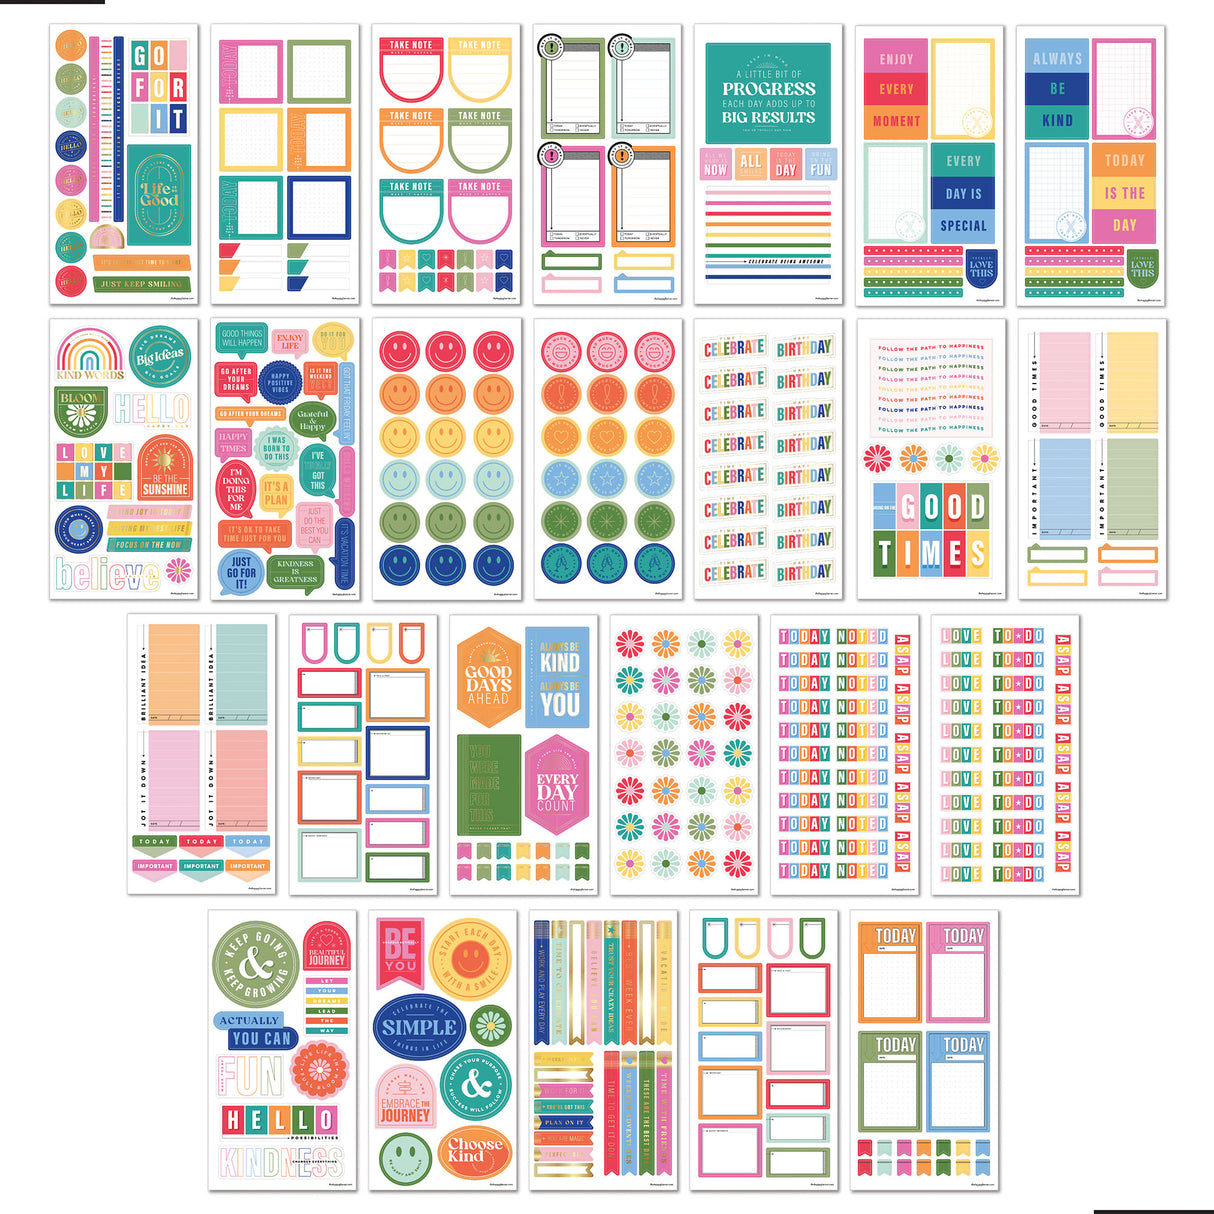 Happy Planner Planner Essentials BIG Mega Sticker Book Value Pack